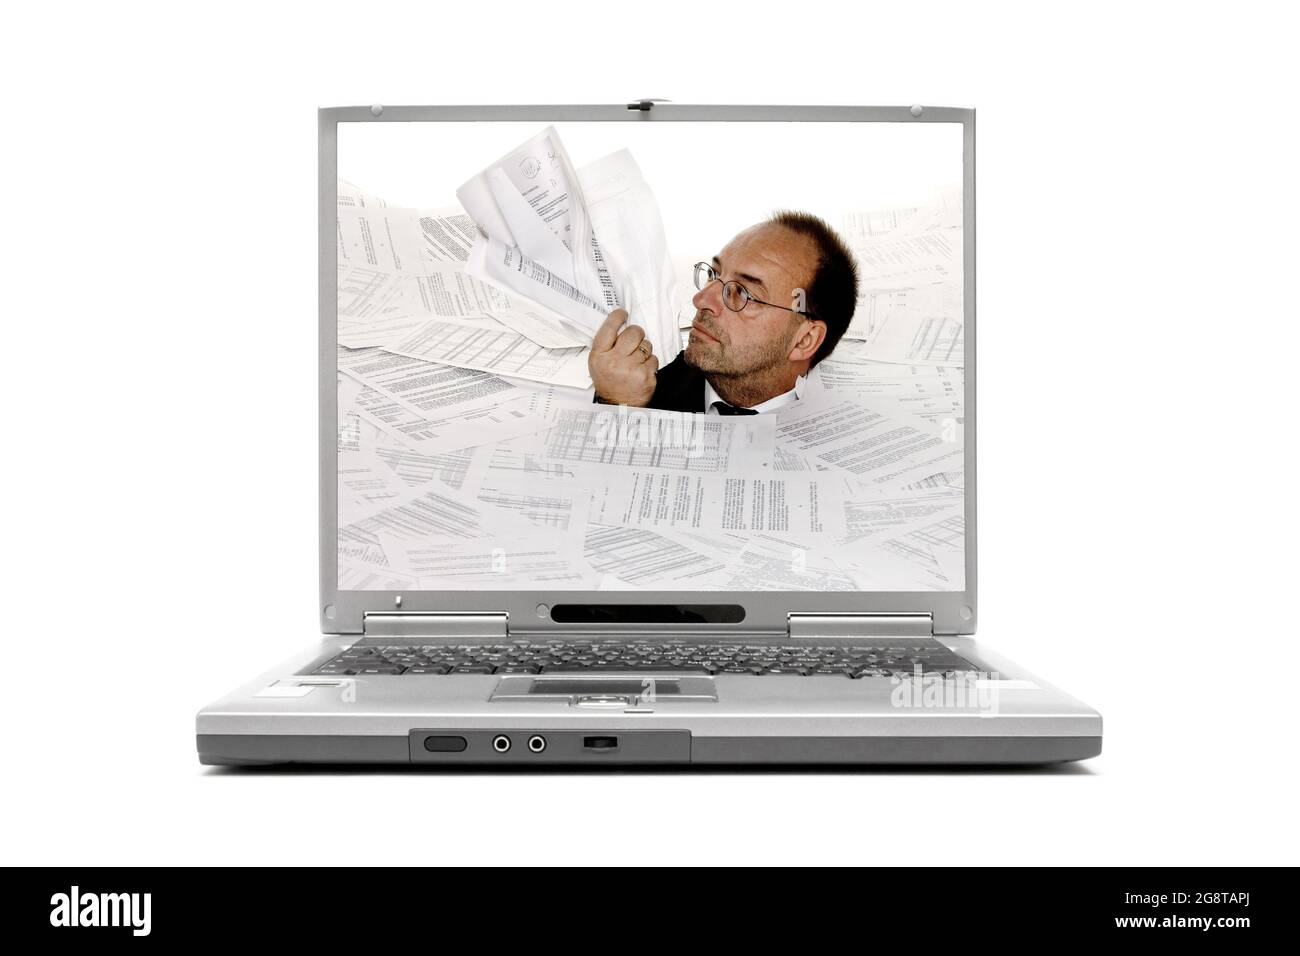 image 'Man suffocating in bills' on laptop display Stock Photo